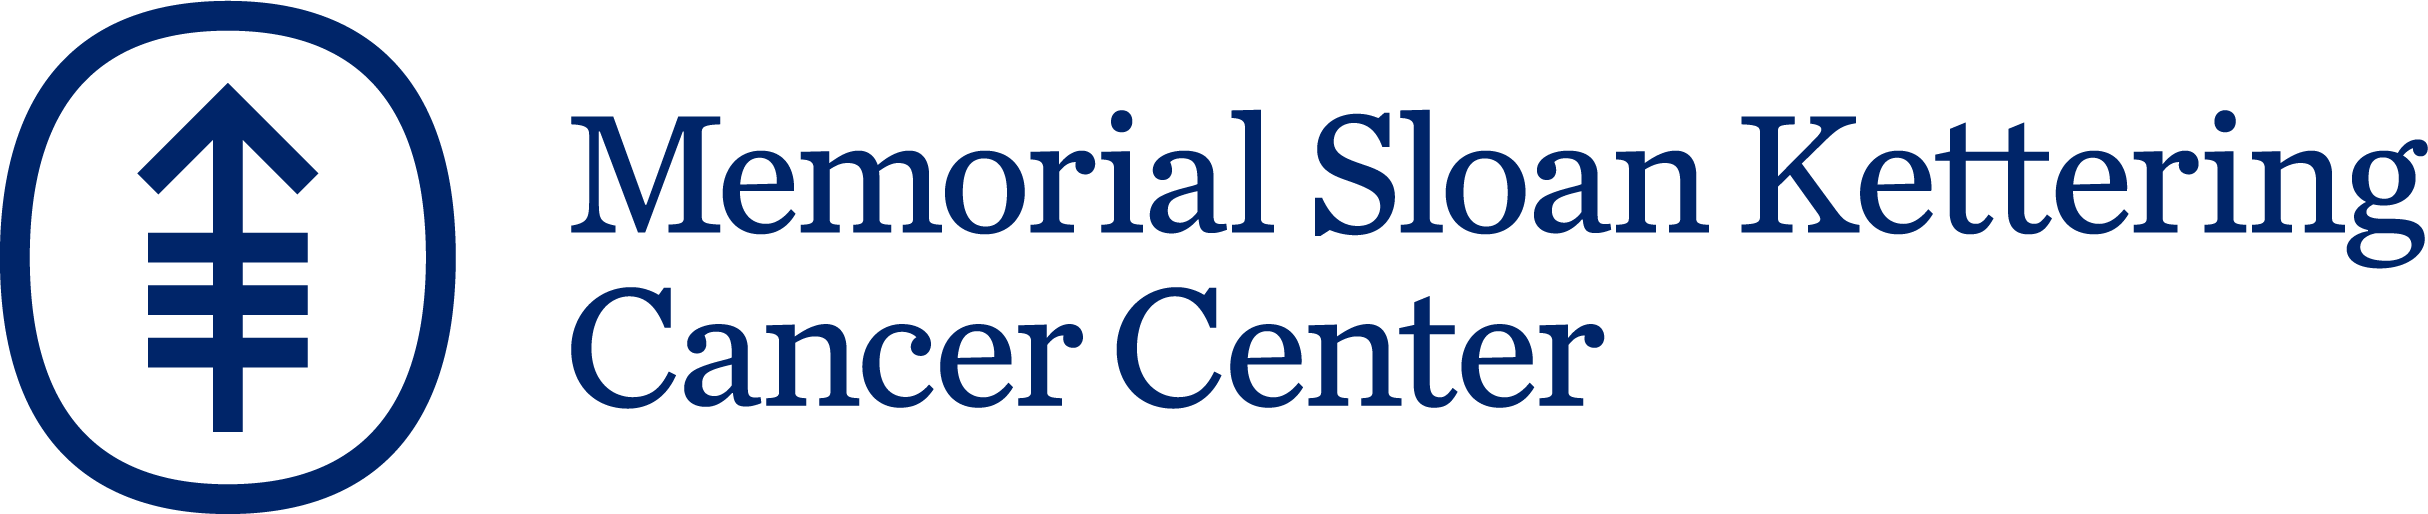 Memorial Sloan Kettering Cancer Center 